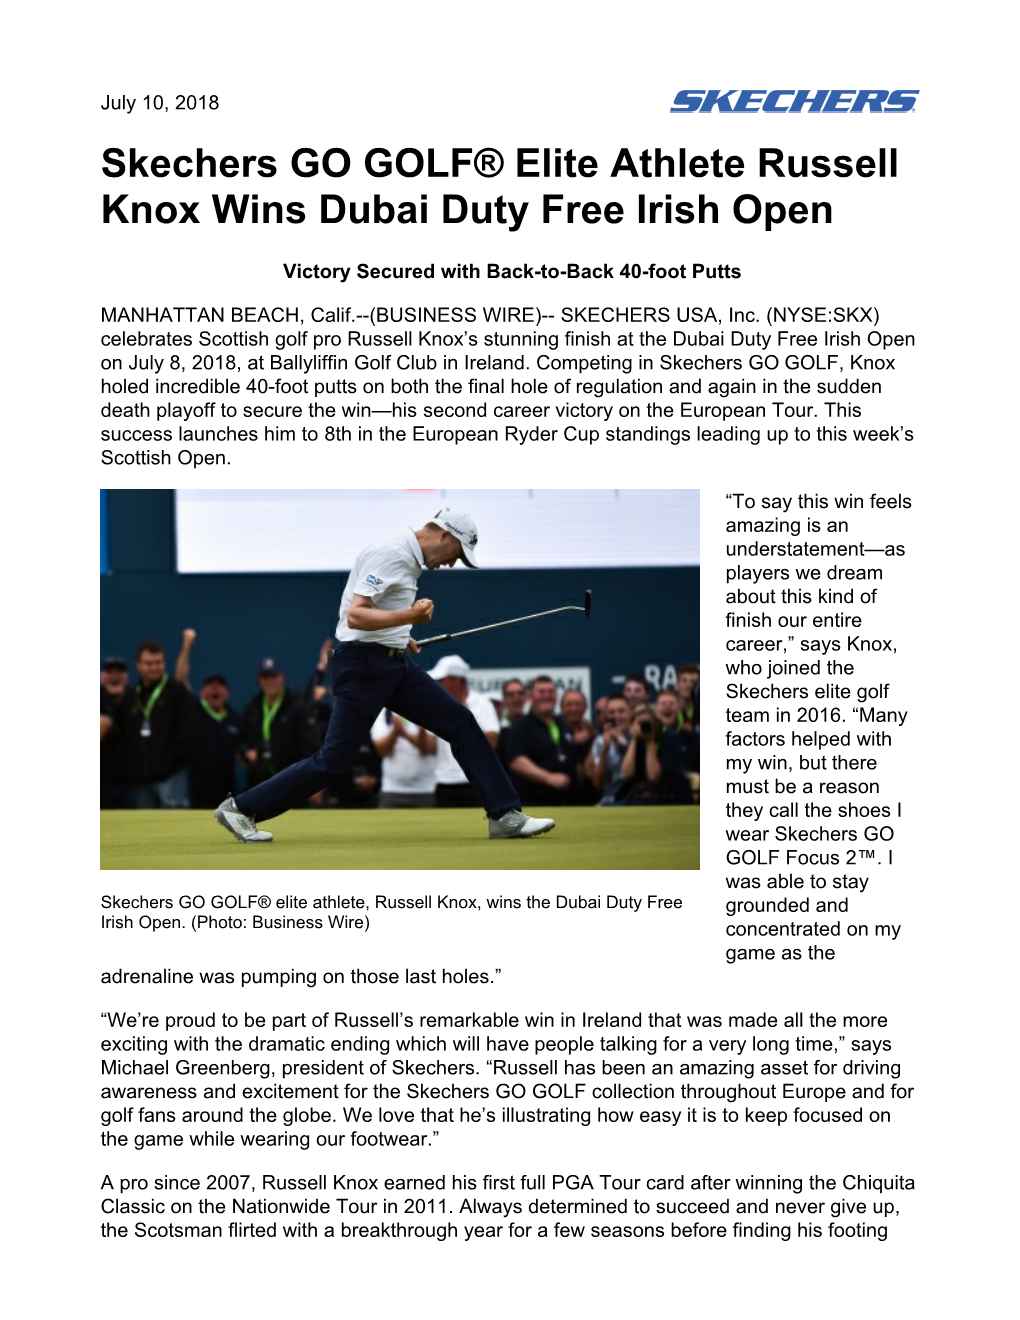 Skechers GO GOLF® Elite Athlete Russell Knox Wins Dubai Duty Free Irish Open